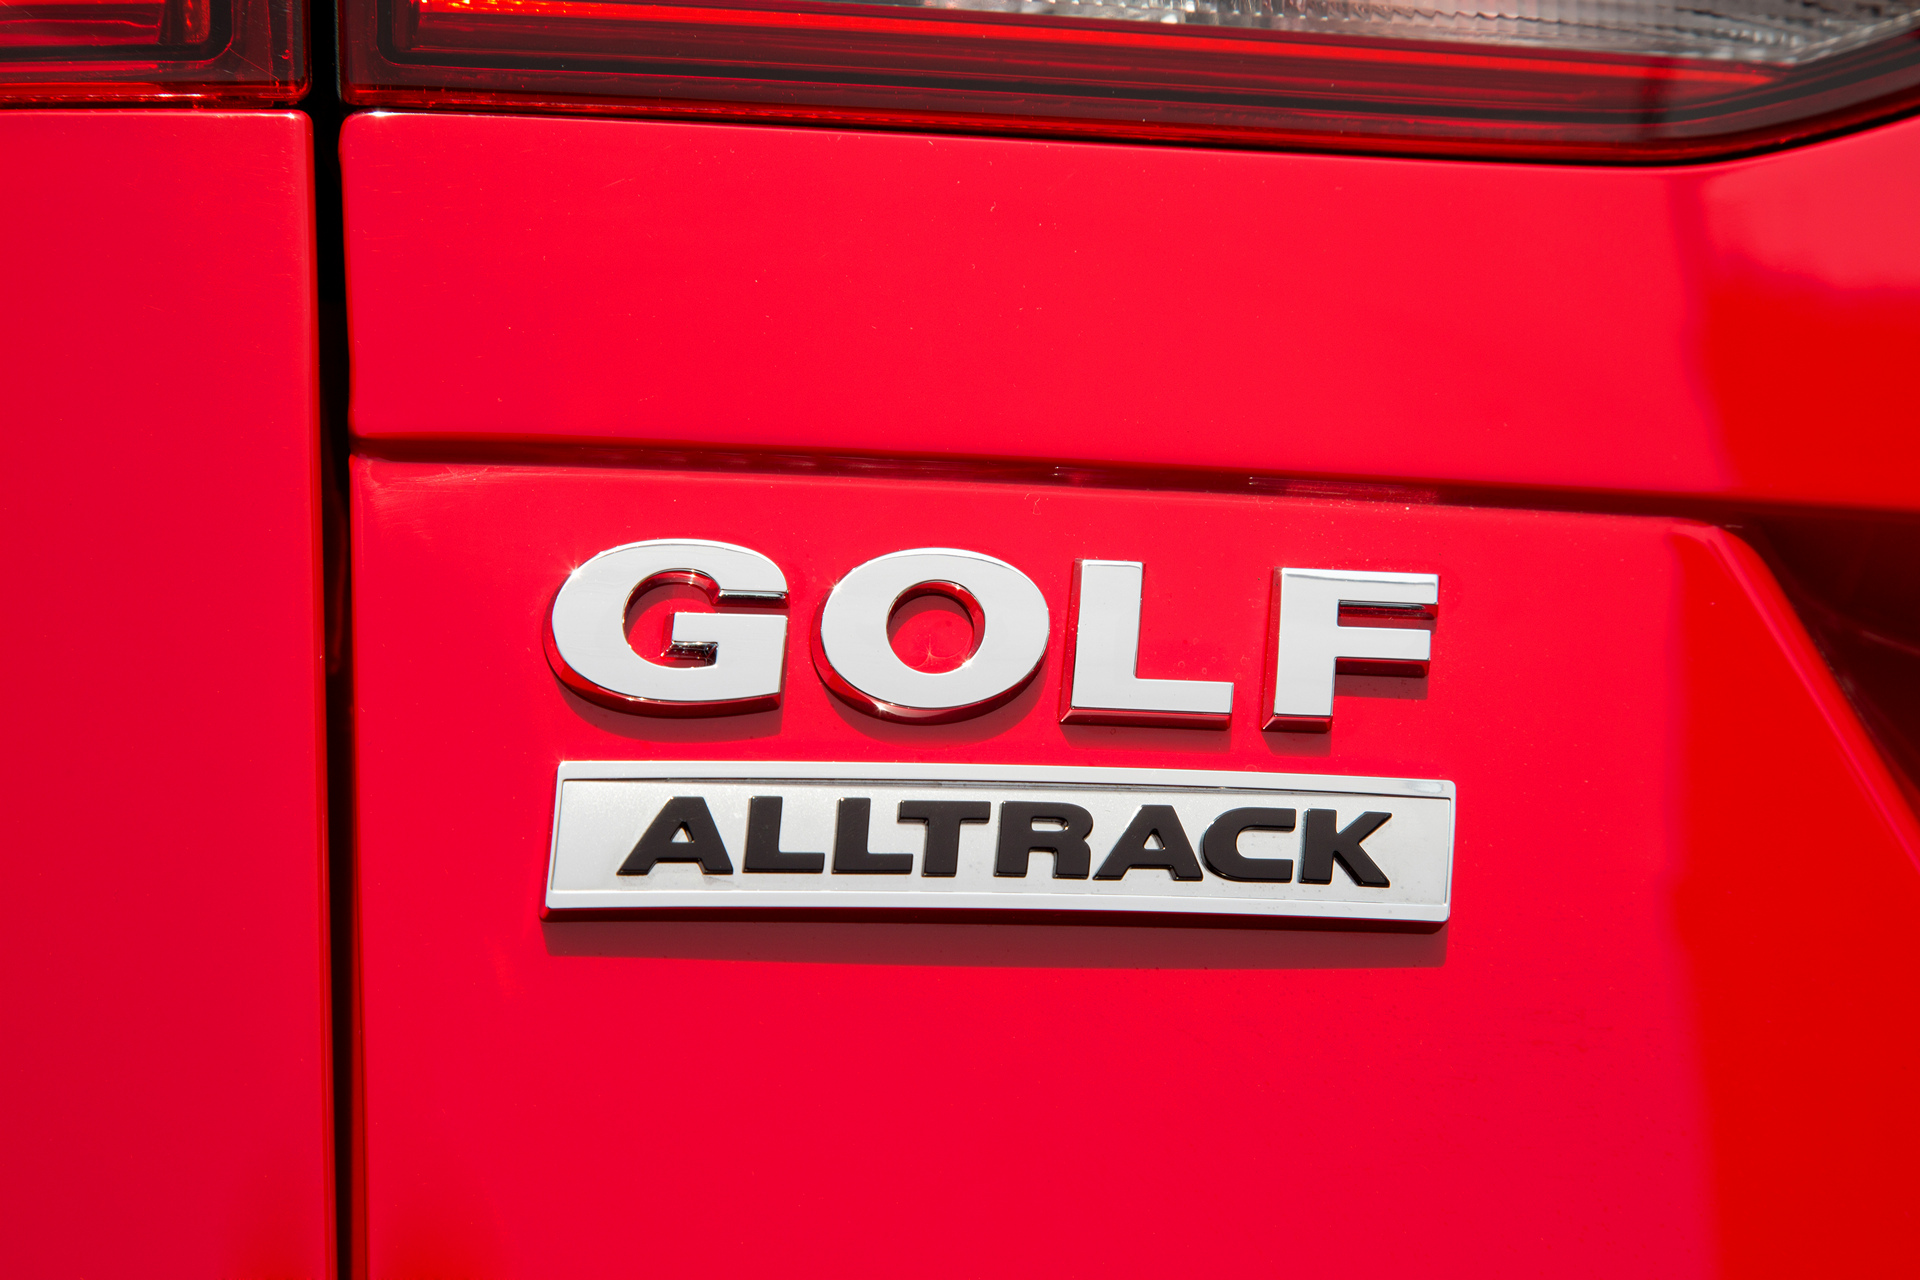 2017 Volkswagen Golf Alltrack © Volkswagen AG